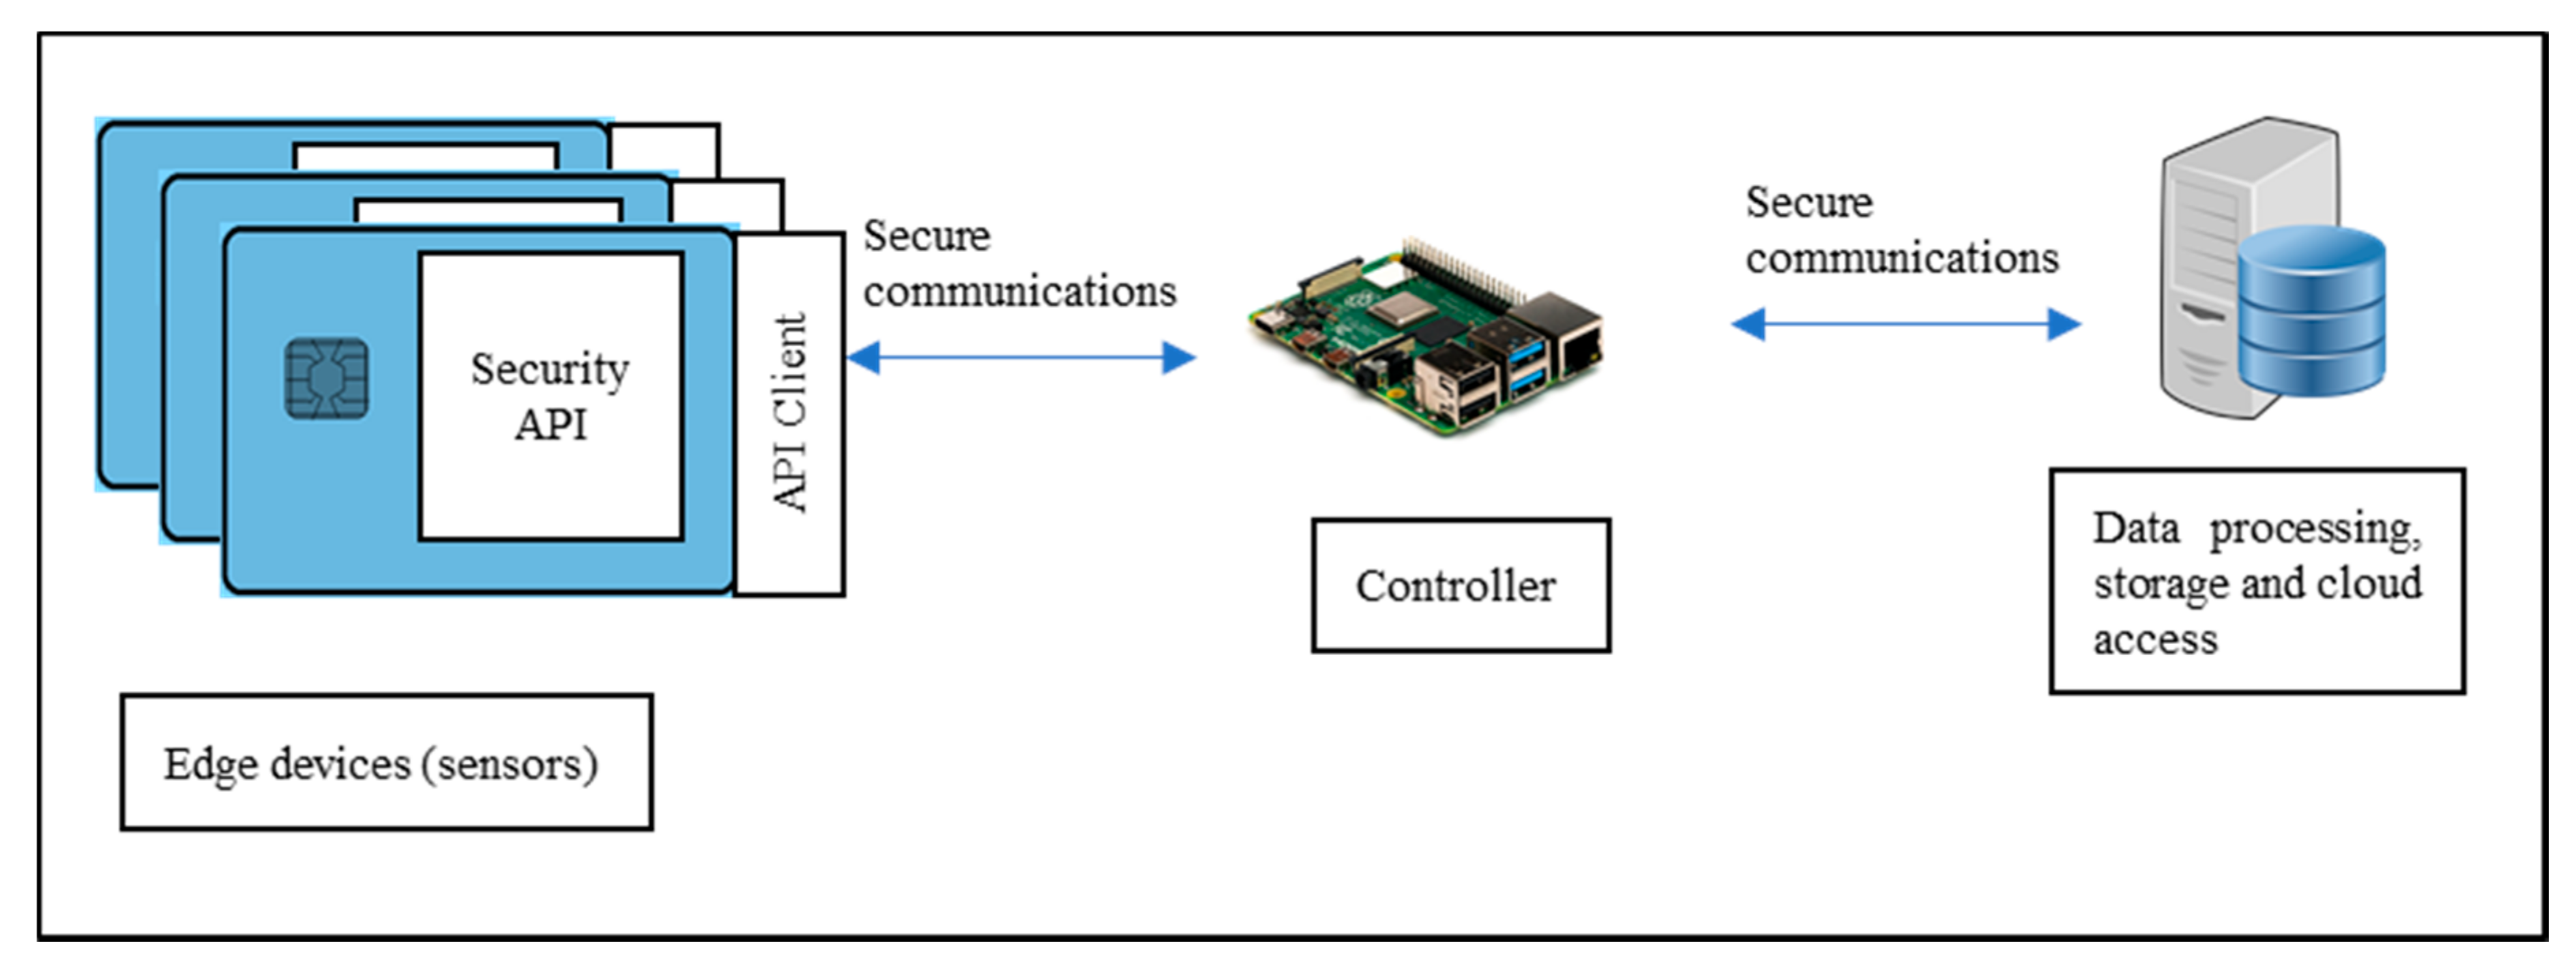 ge security smart connection center manual transmission